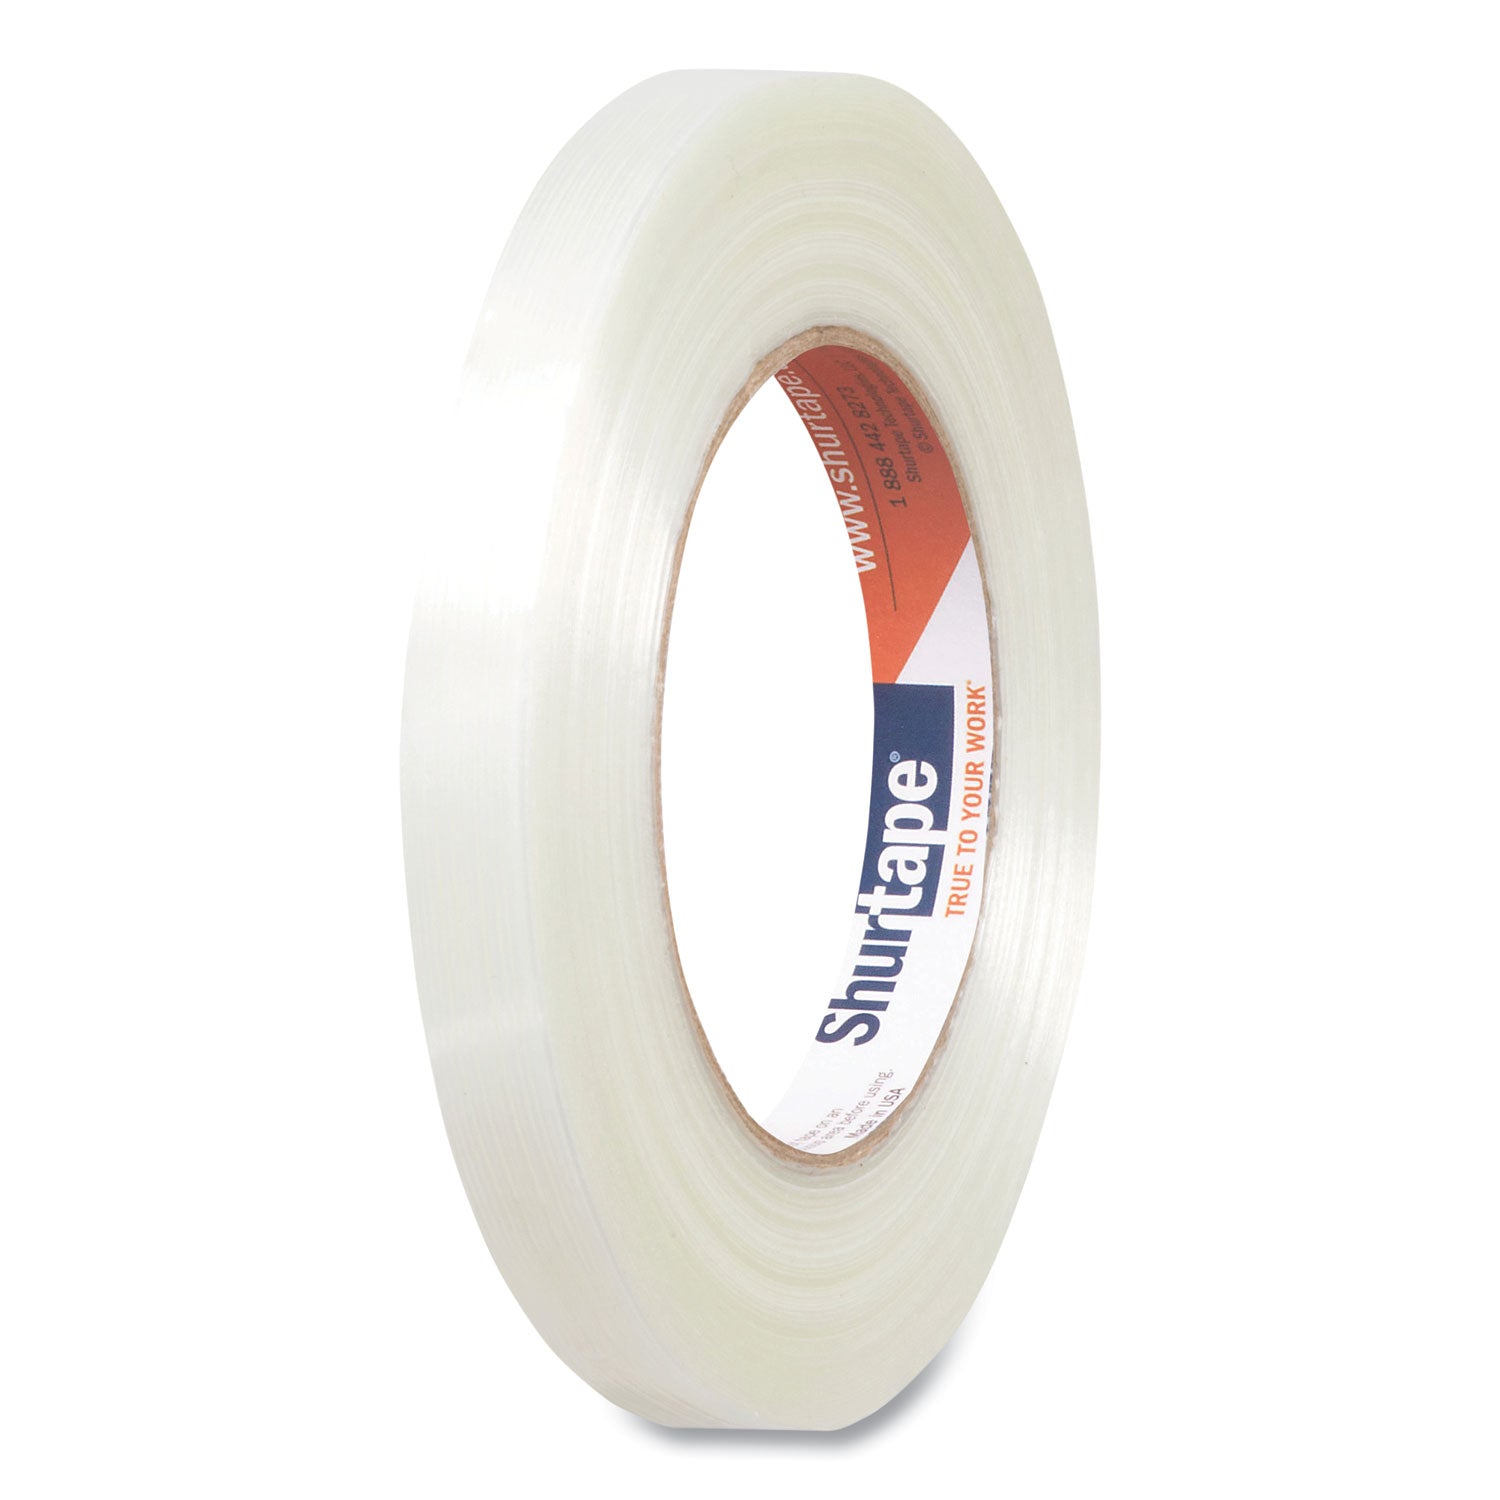 gs-490-economy-grade-fiberglass-reinforced-strapping-tape-047-x-6015-yds-white-72-carton_shu101228 - 2